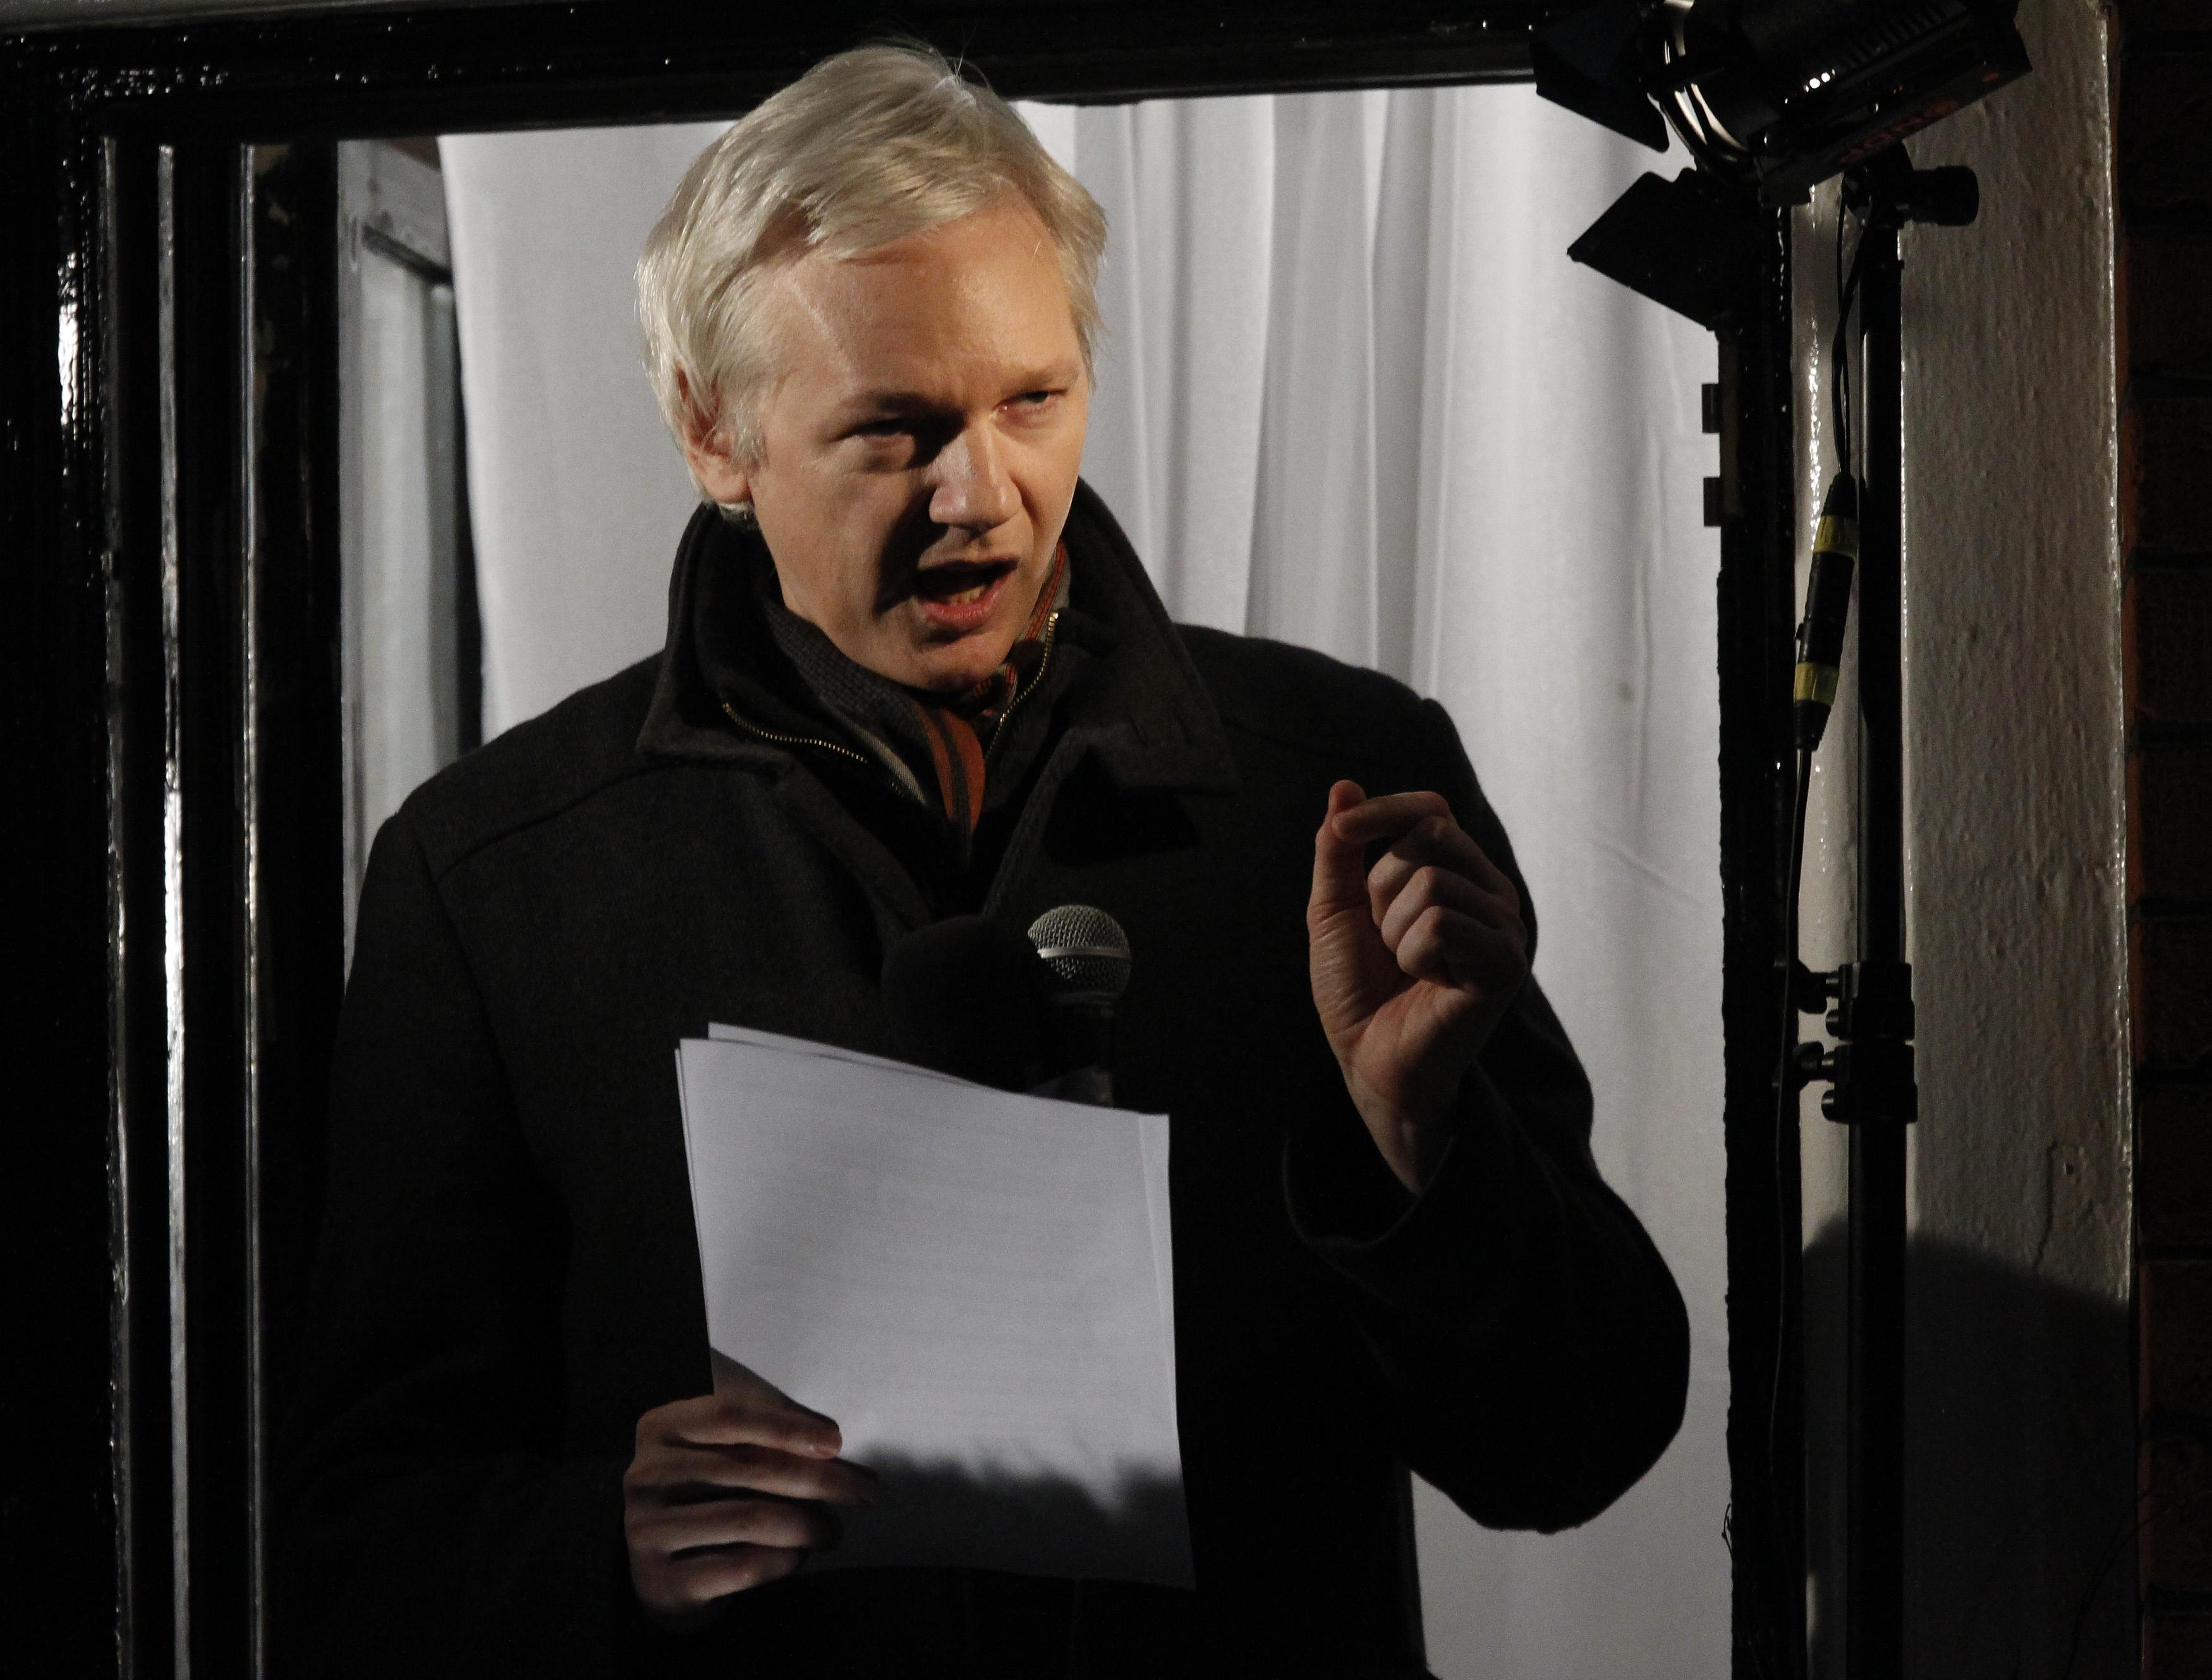 Ecuador foreign minister to meet Assange Sunday